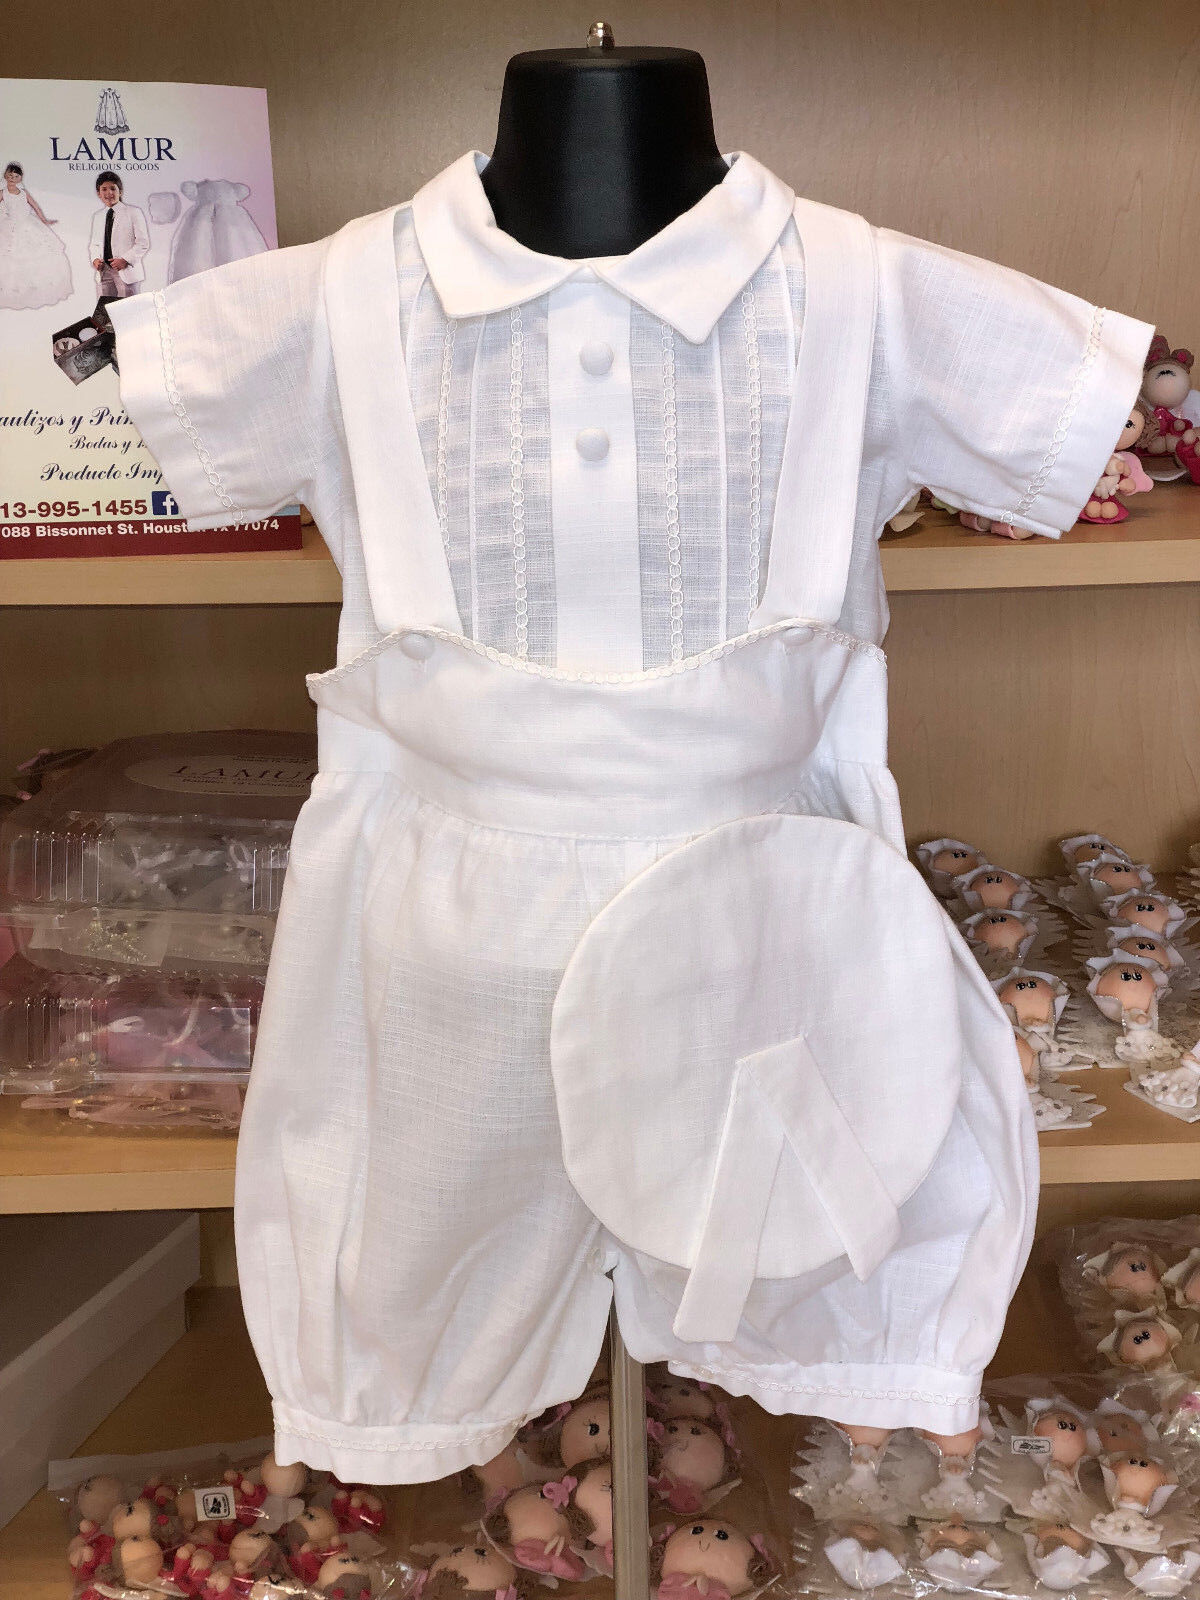 añadir girar Cuando traje corto de bautizo para niño/Bautismo ADORABLE Baptism Shorts Outfit  for boy | eBay